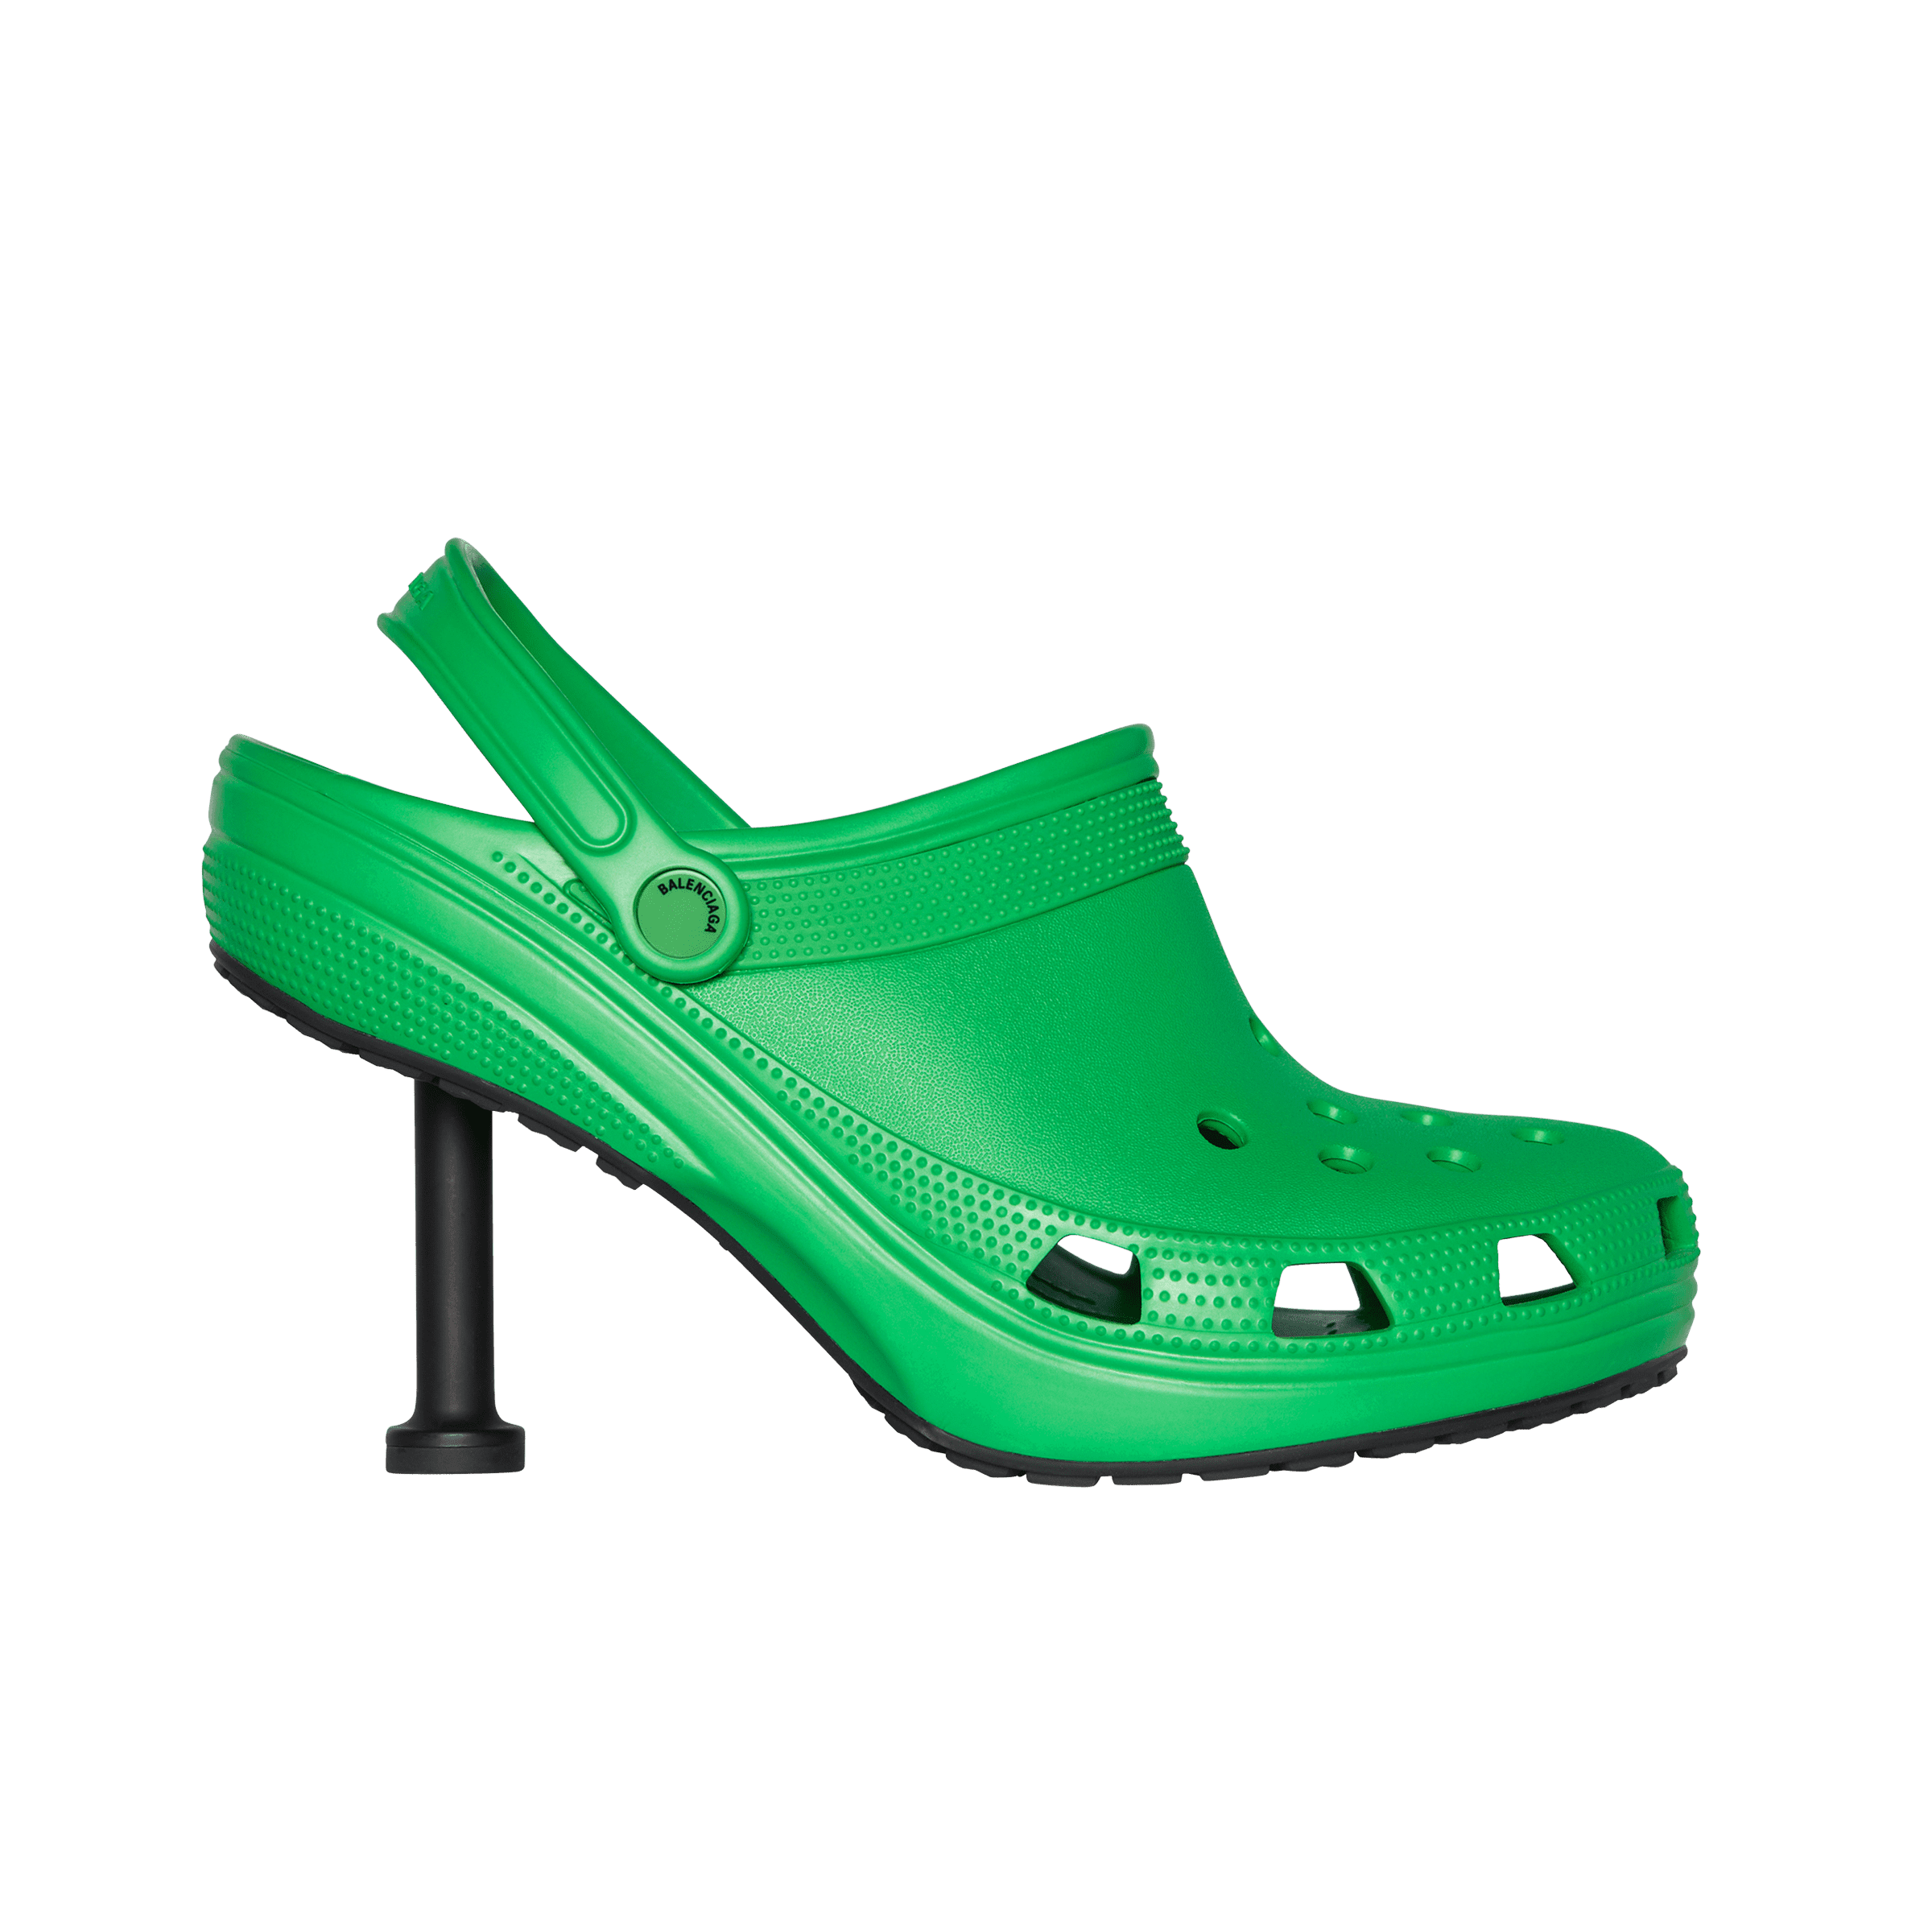 Crocs are no longer the world's ugliest shoe thanks to Kim